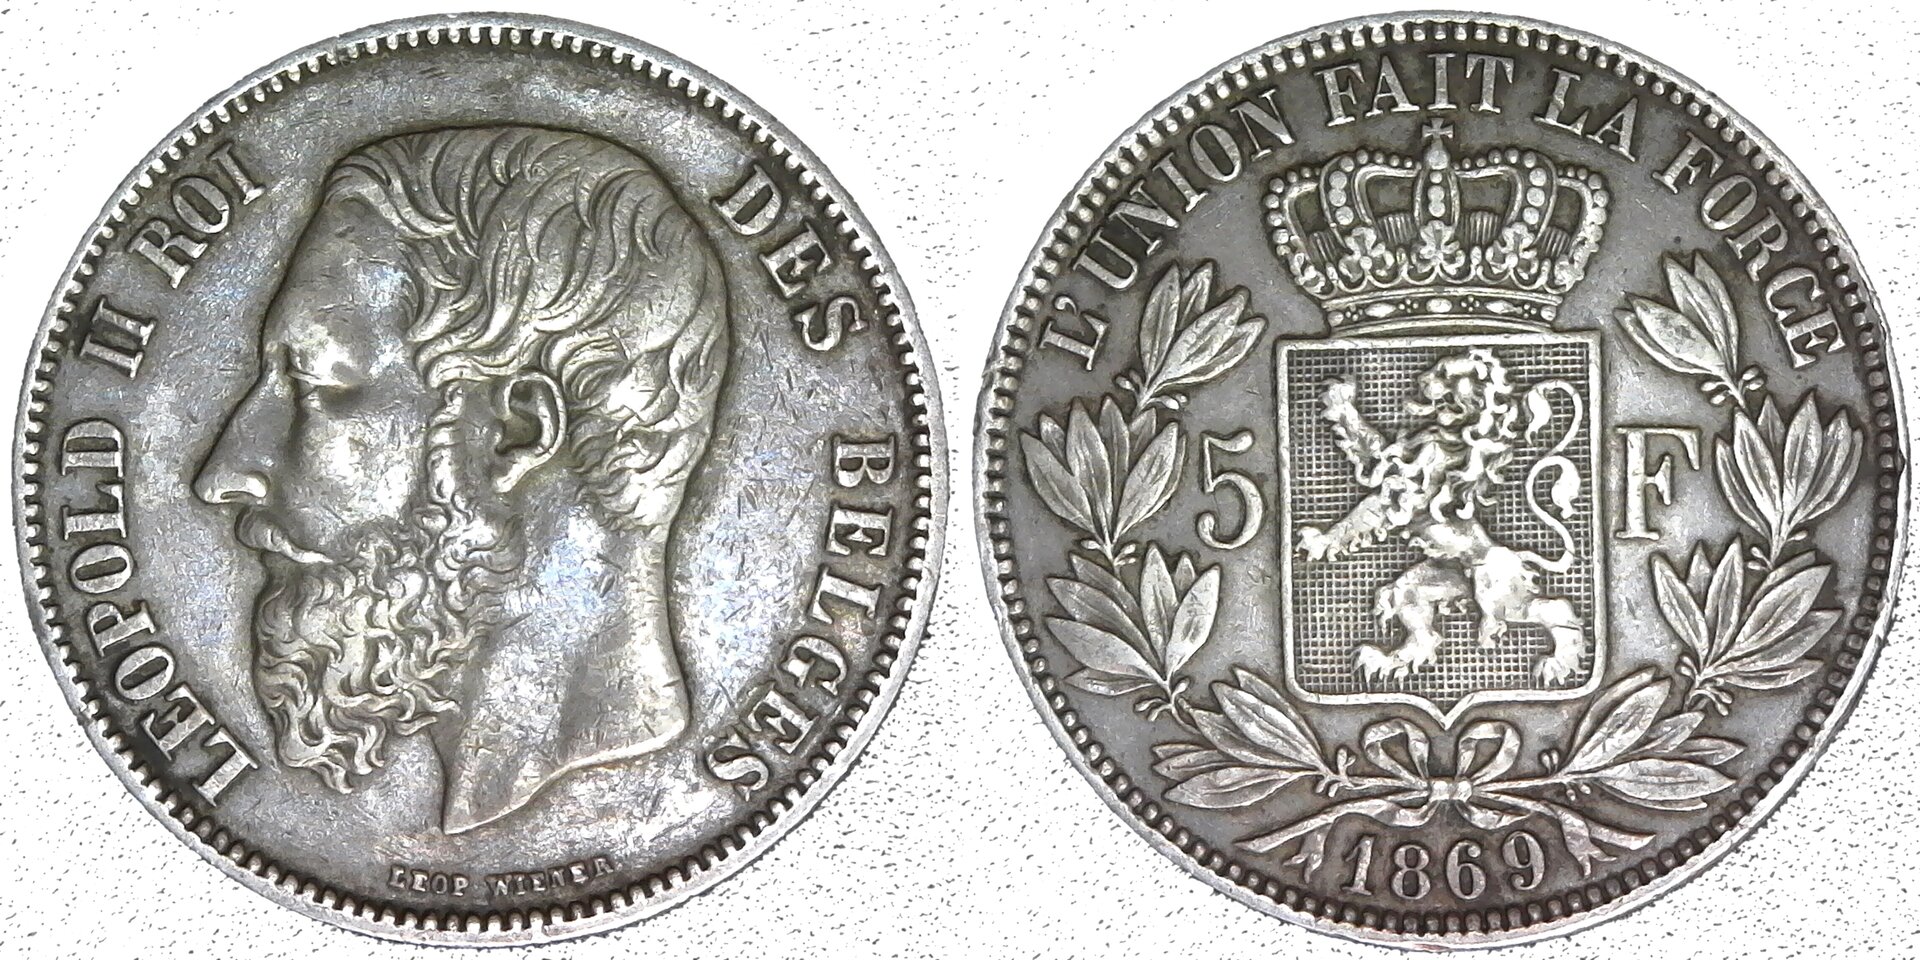 Belgium 5 Francs  1869 obv-side-cutout.jpg